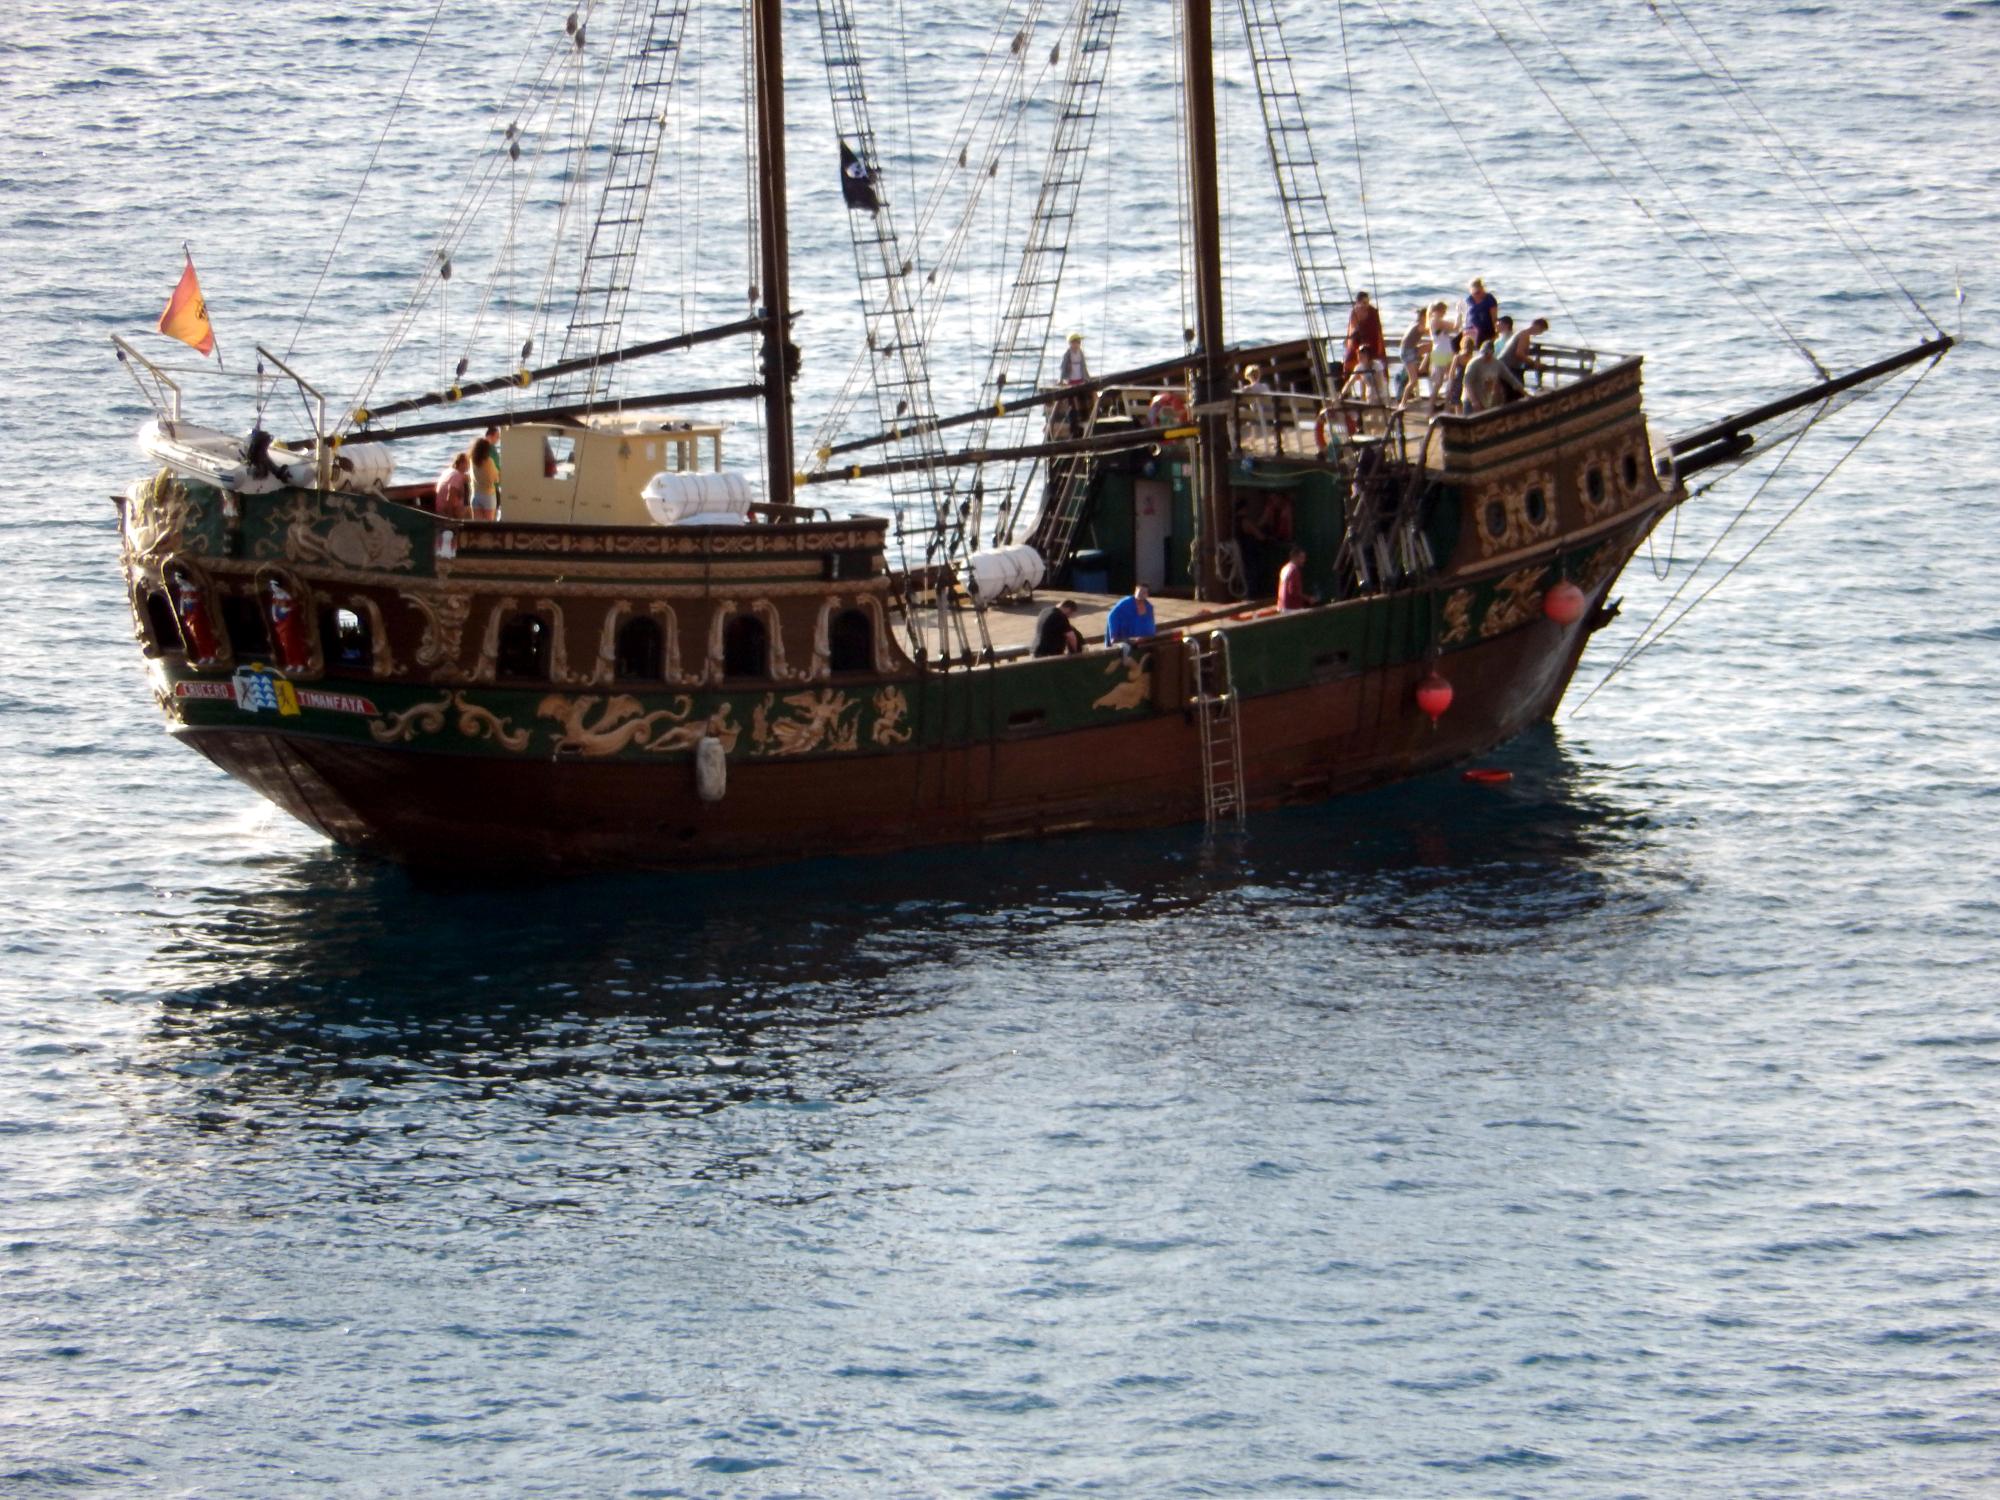  Canary Islands - Pirate Boat